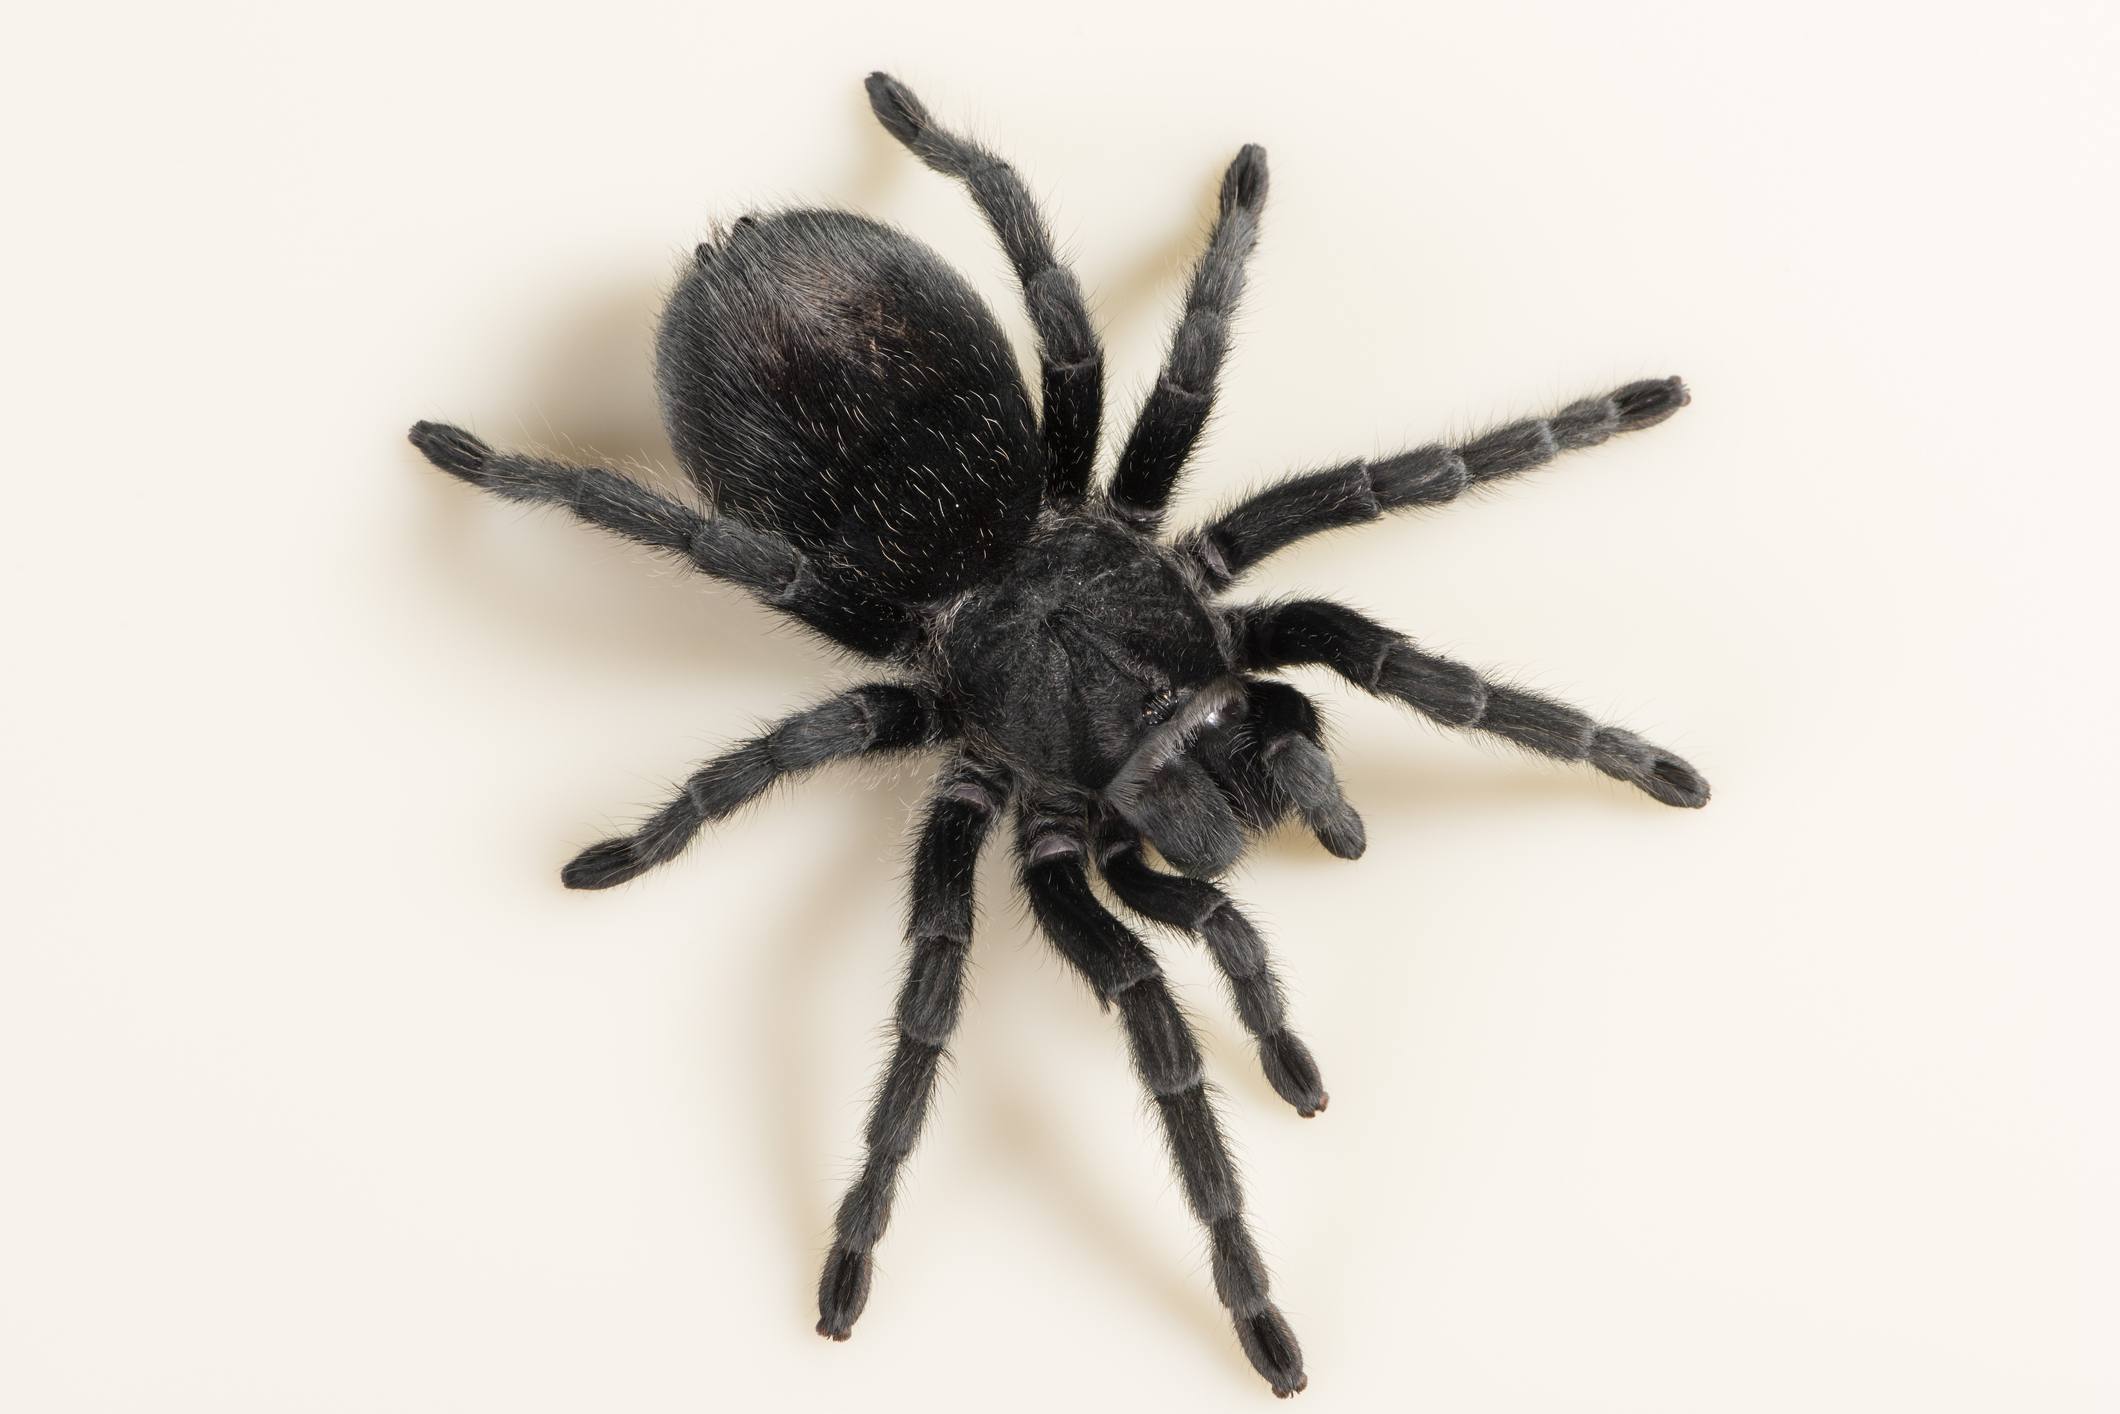 Brazilian black tarantula on a white background